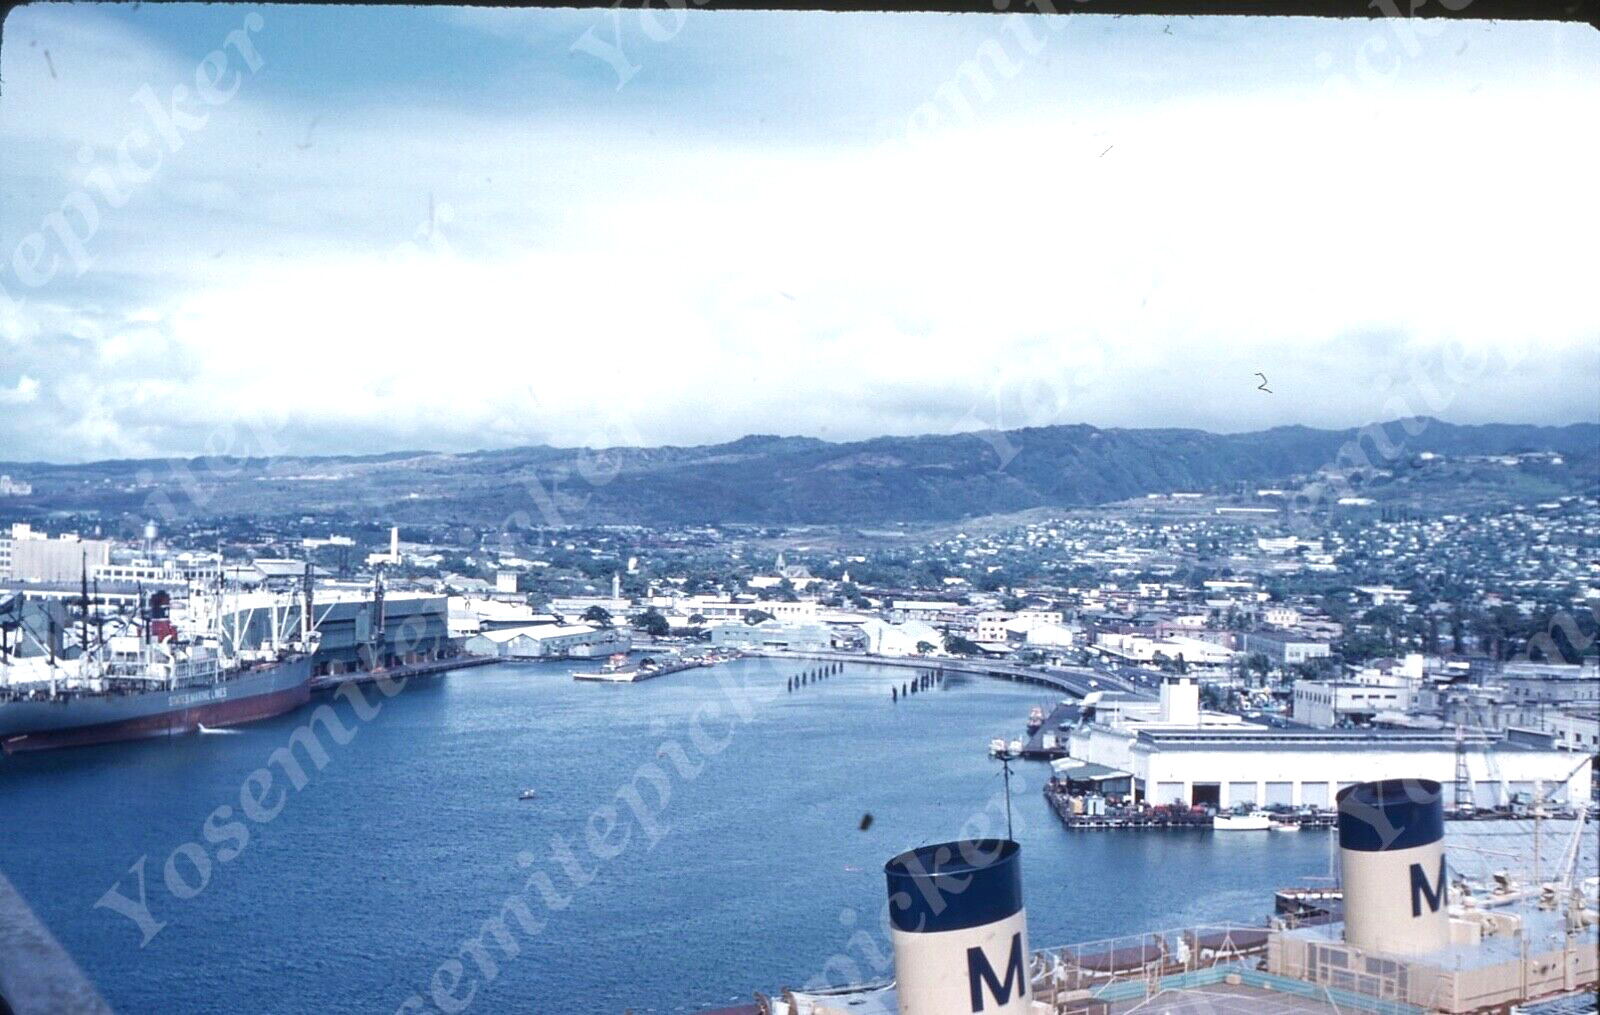 sl84 Original slide 1959 Hawaii Bay Matsonia passenger cruise ship 570a